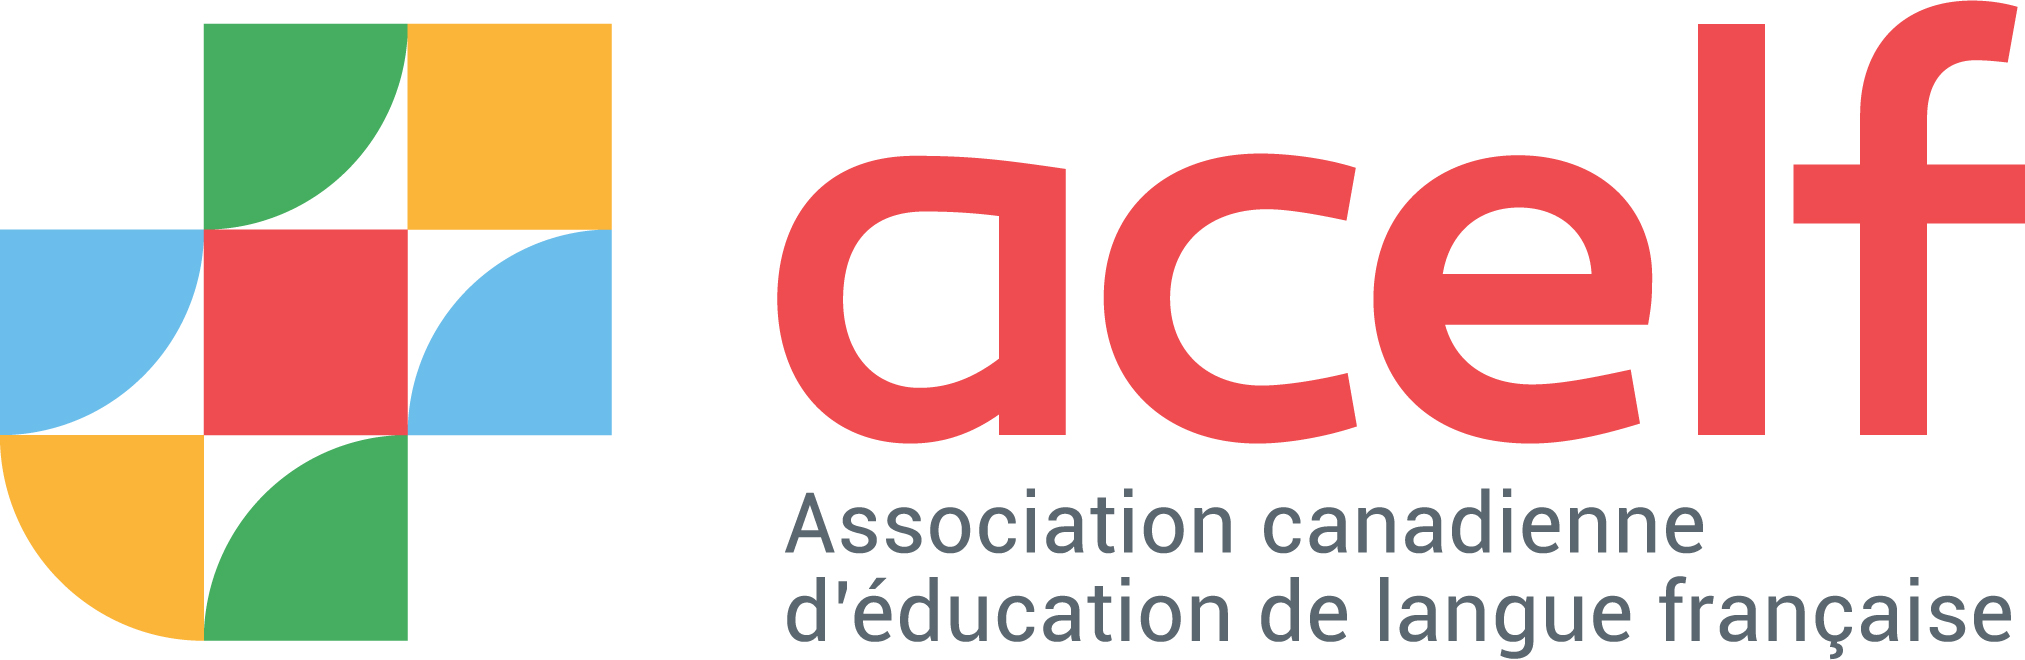 acelf-logo-full-color-rgb (1)